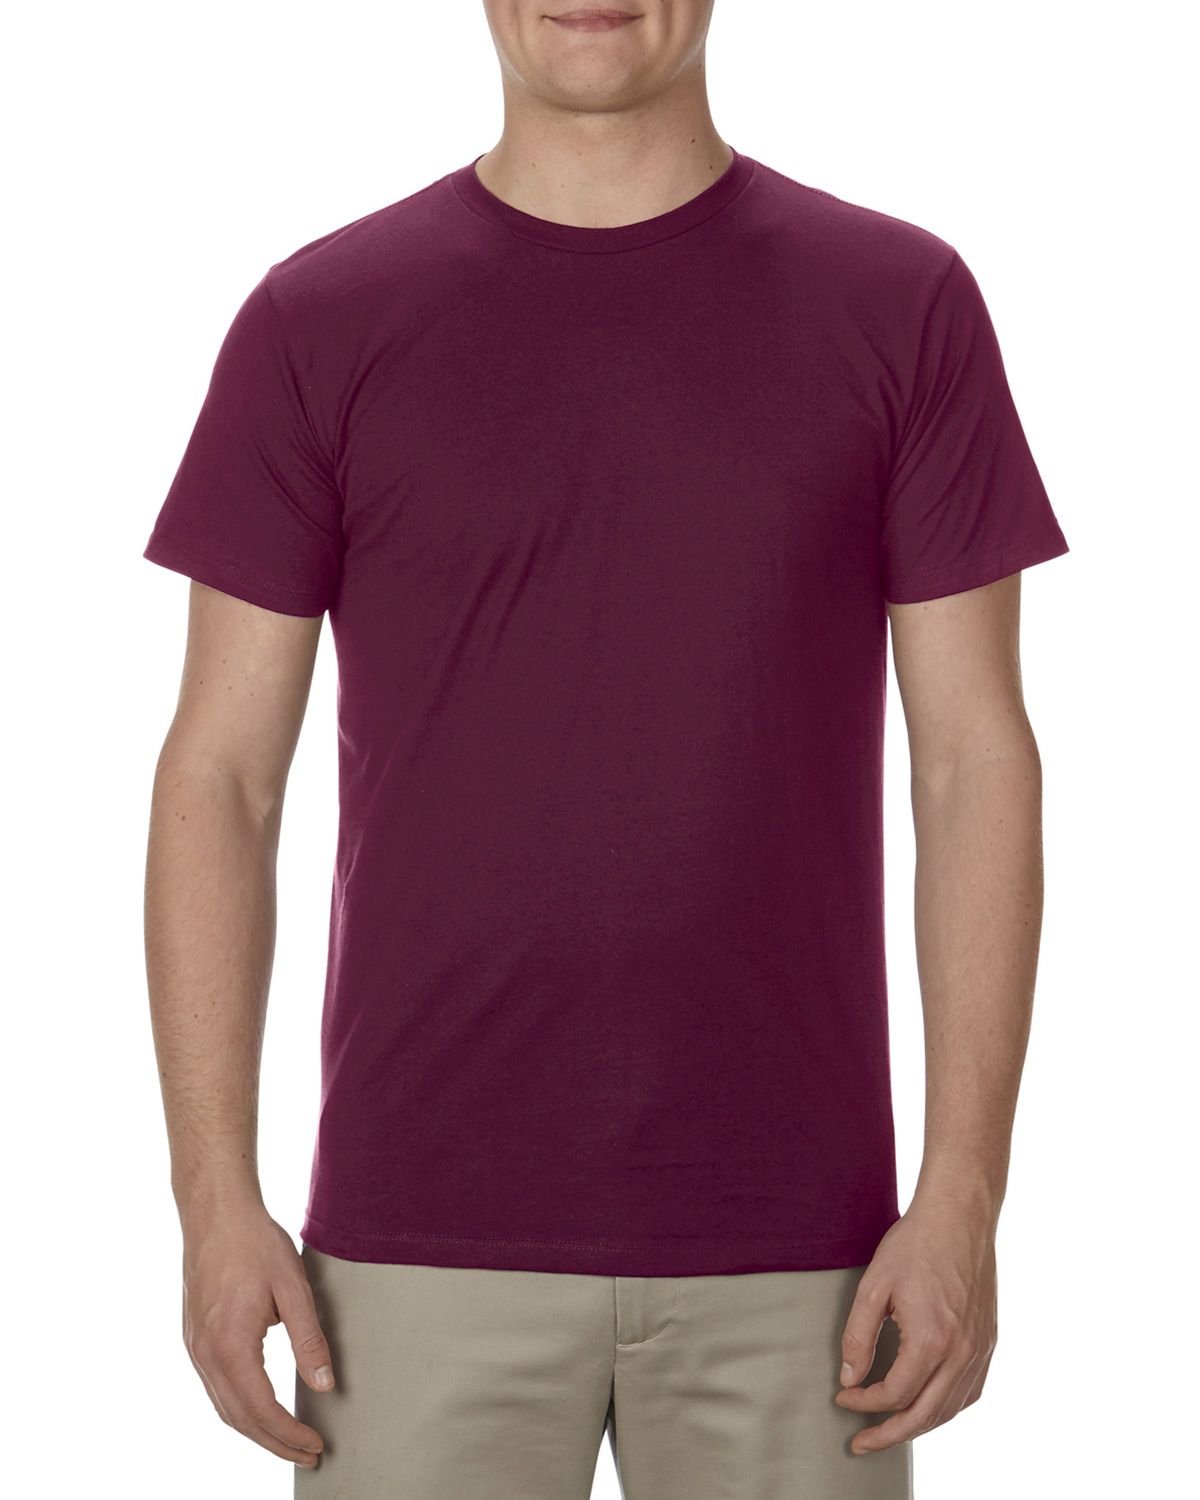 Alstyle AL5301N Men's 4.3 oz. Ringspun Cotton T-Shirt